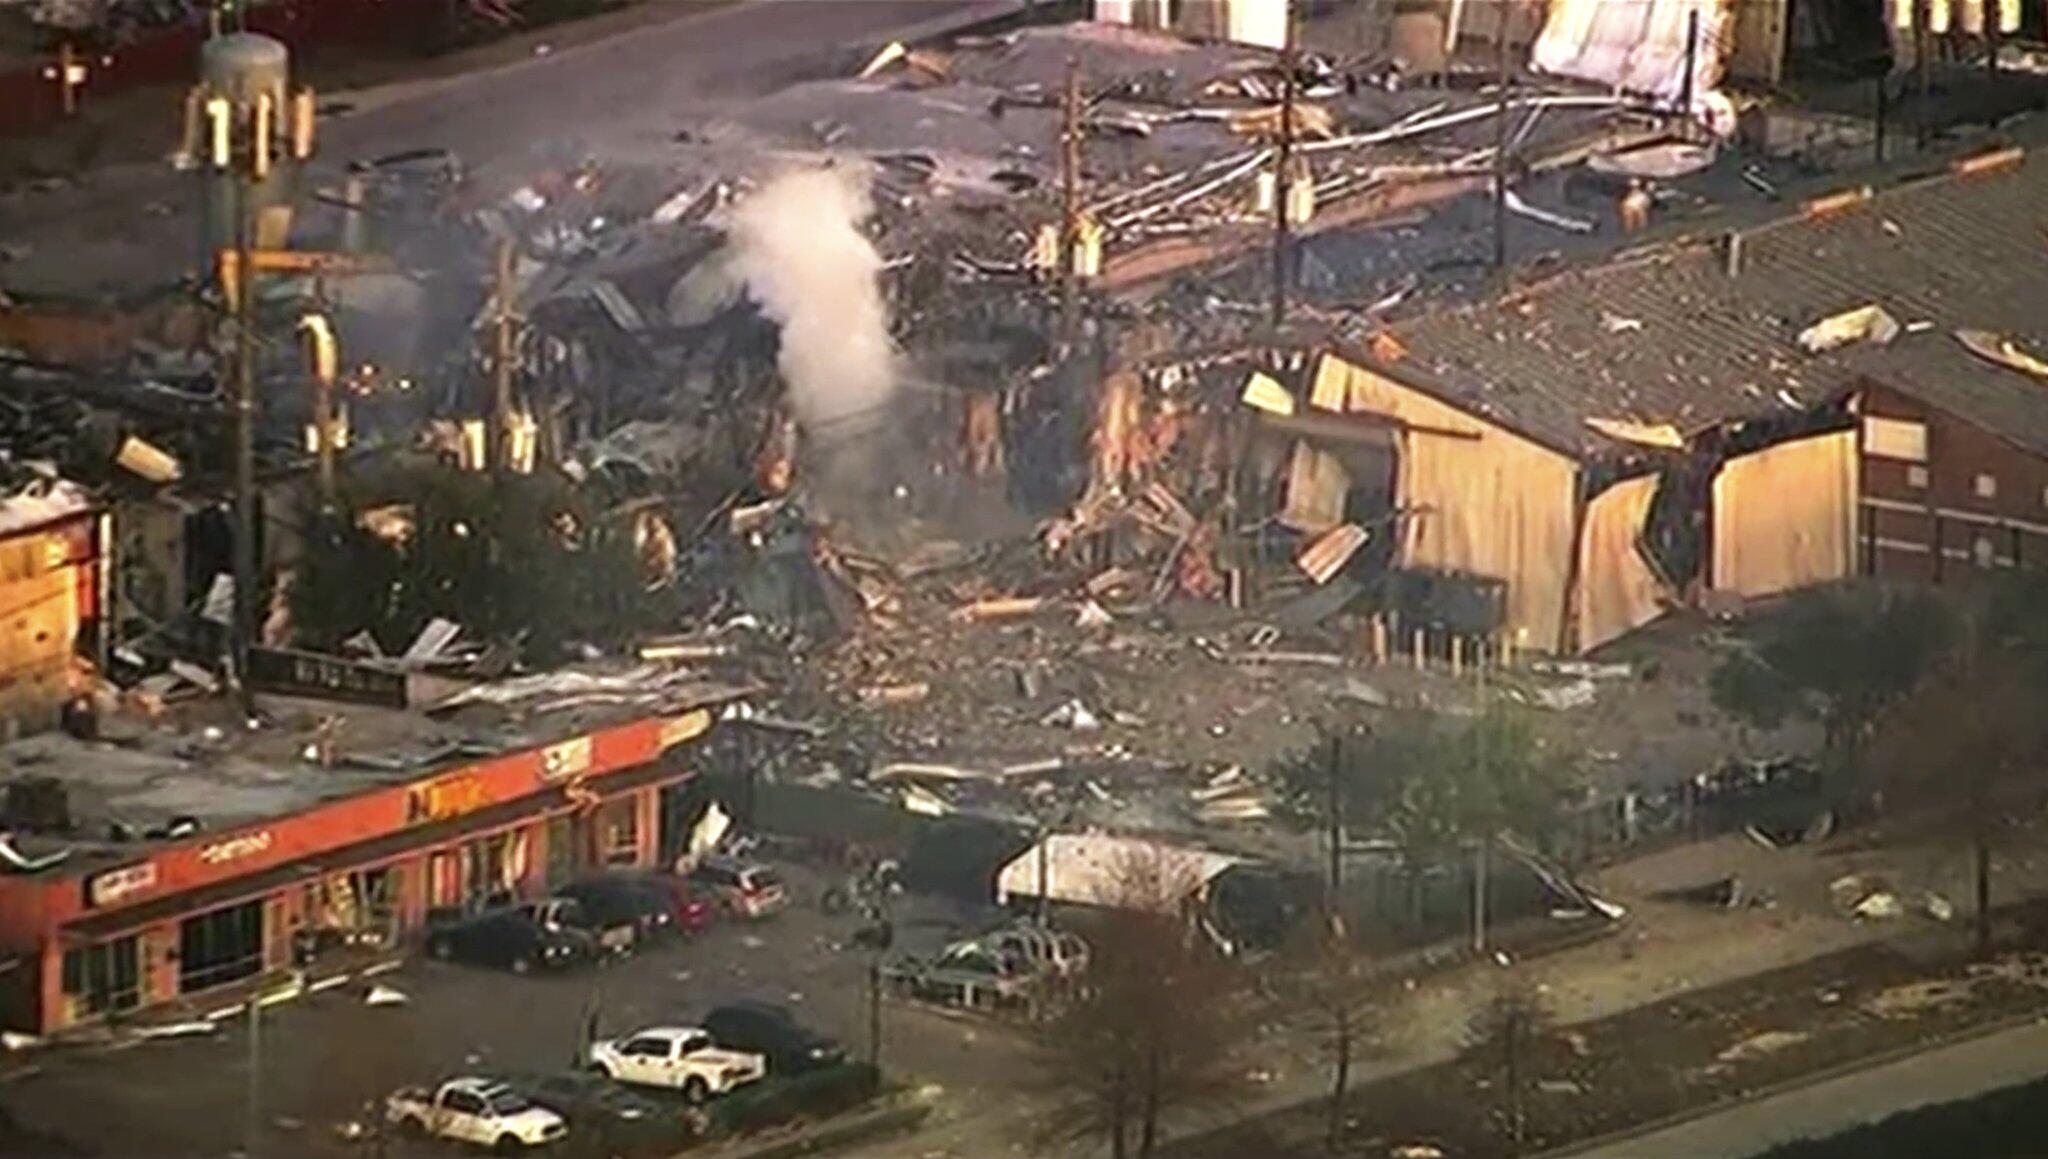 Gewaltige Explosion in Houston - Zerstörungen im Umfeld | WEB.DE2048 x 1159